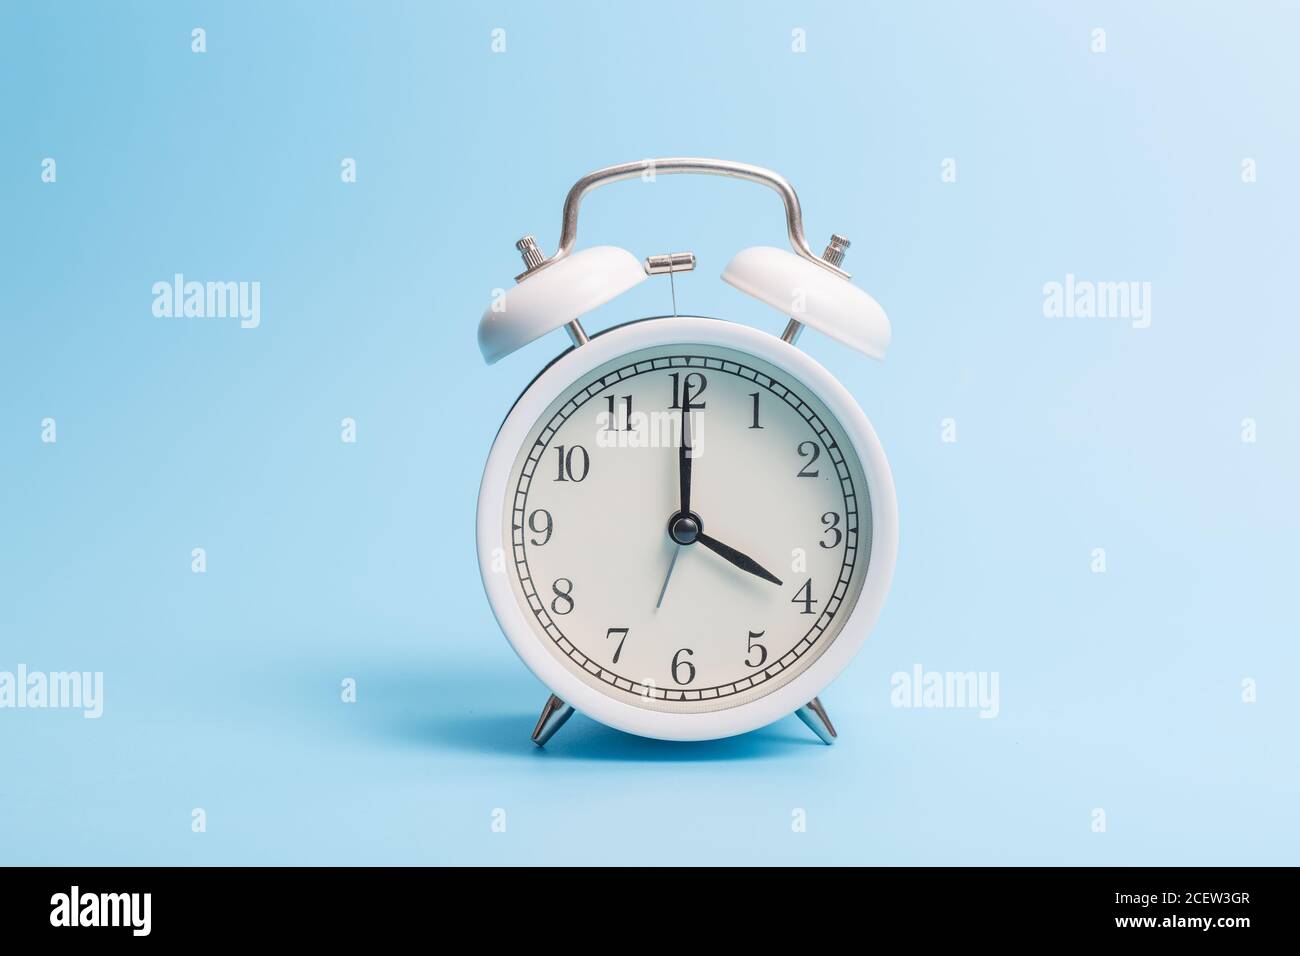 Alarm clock on blue background Stock Photo